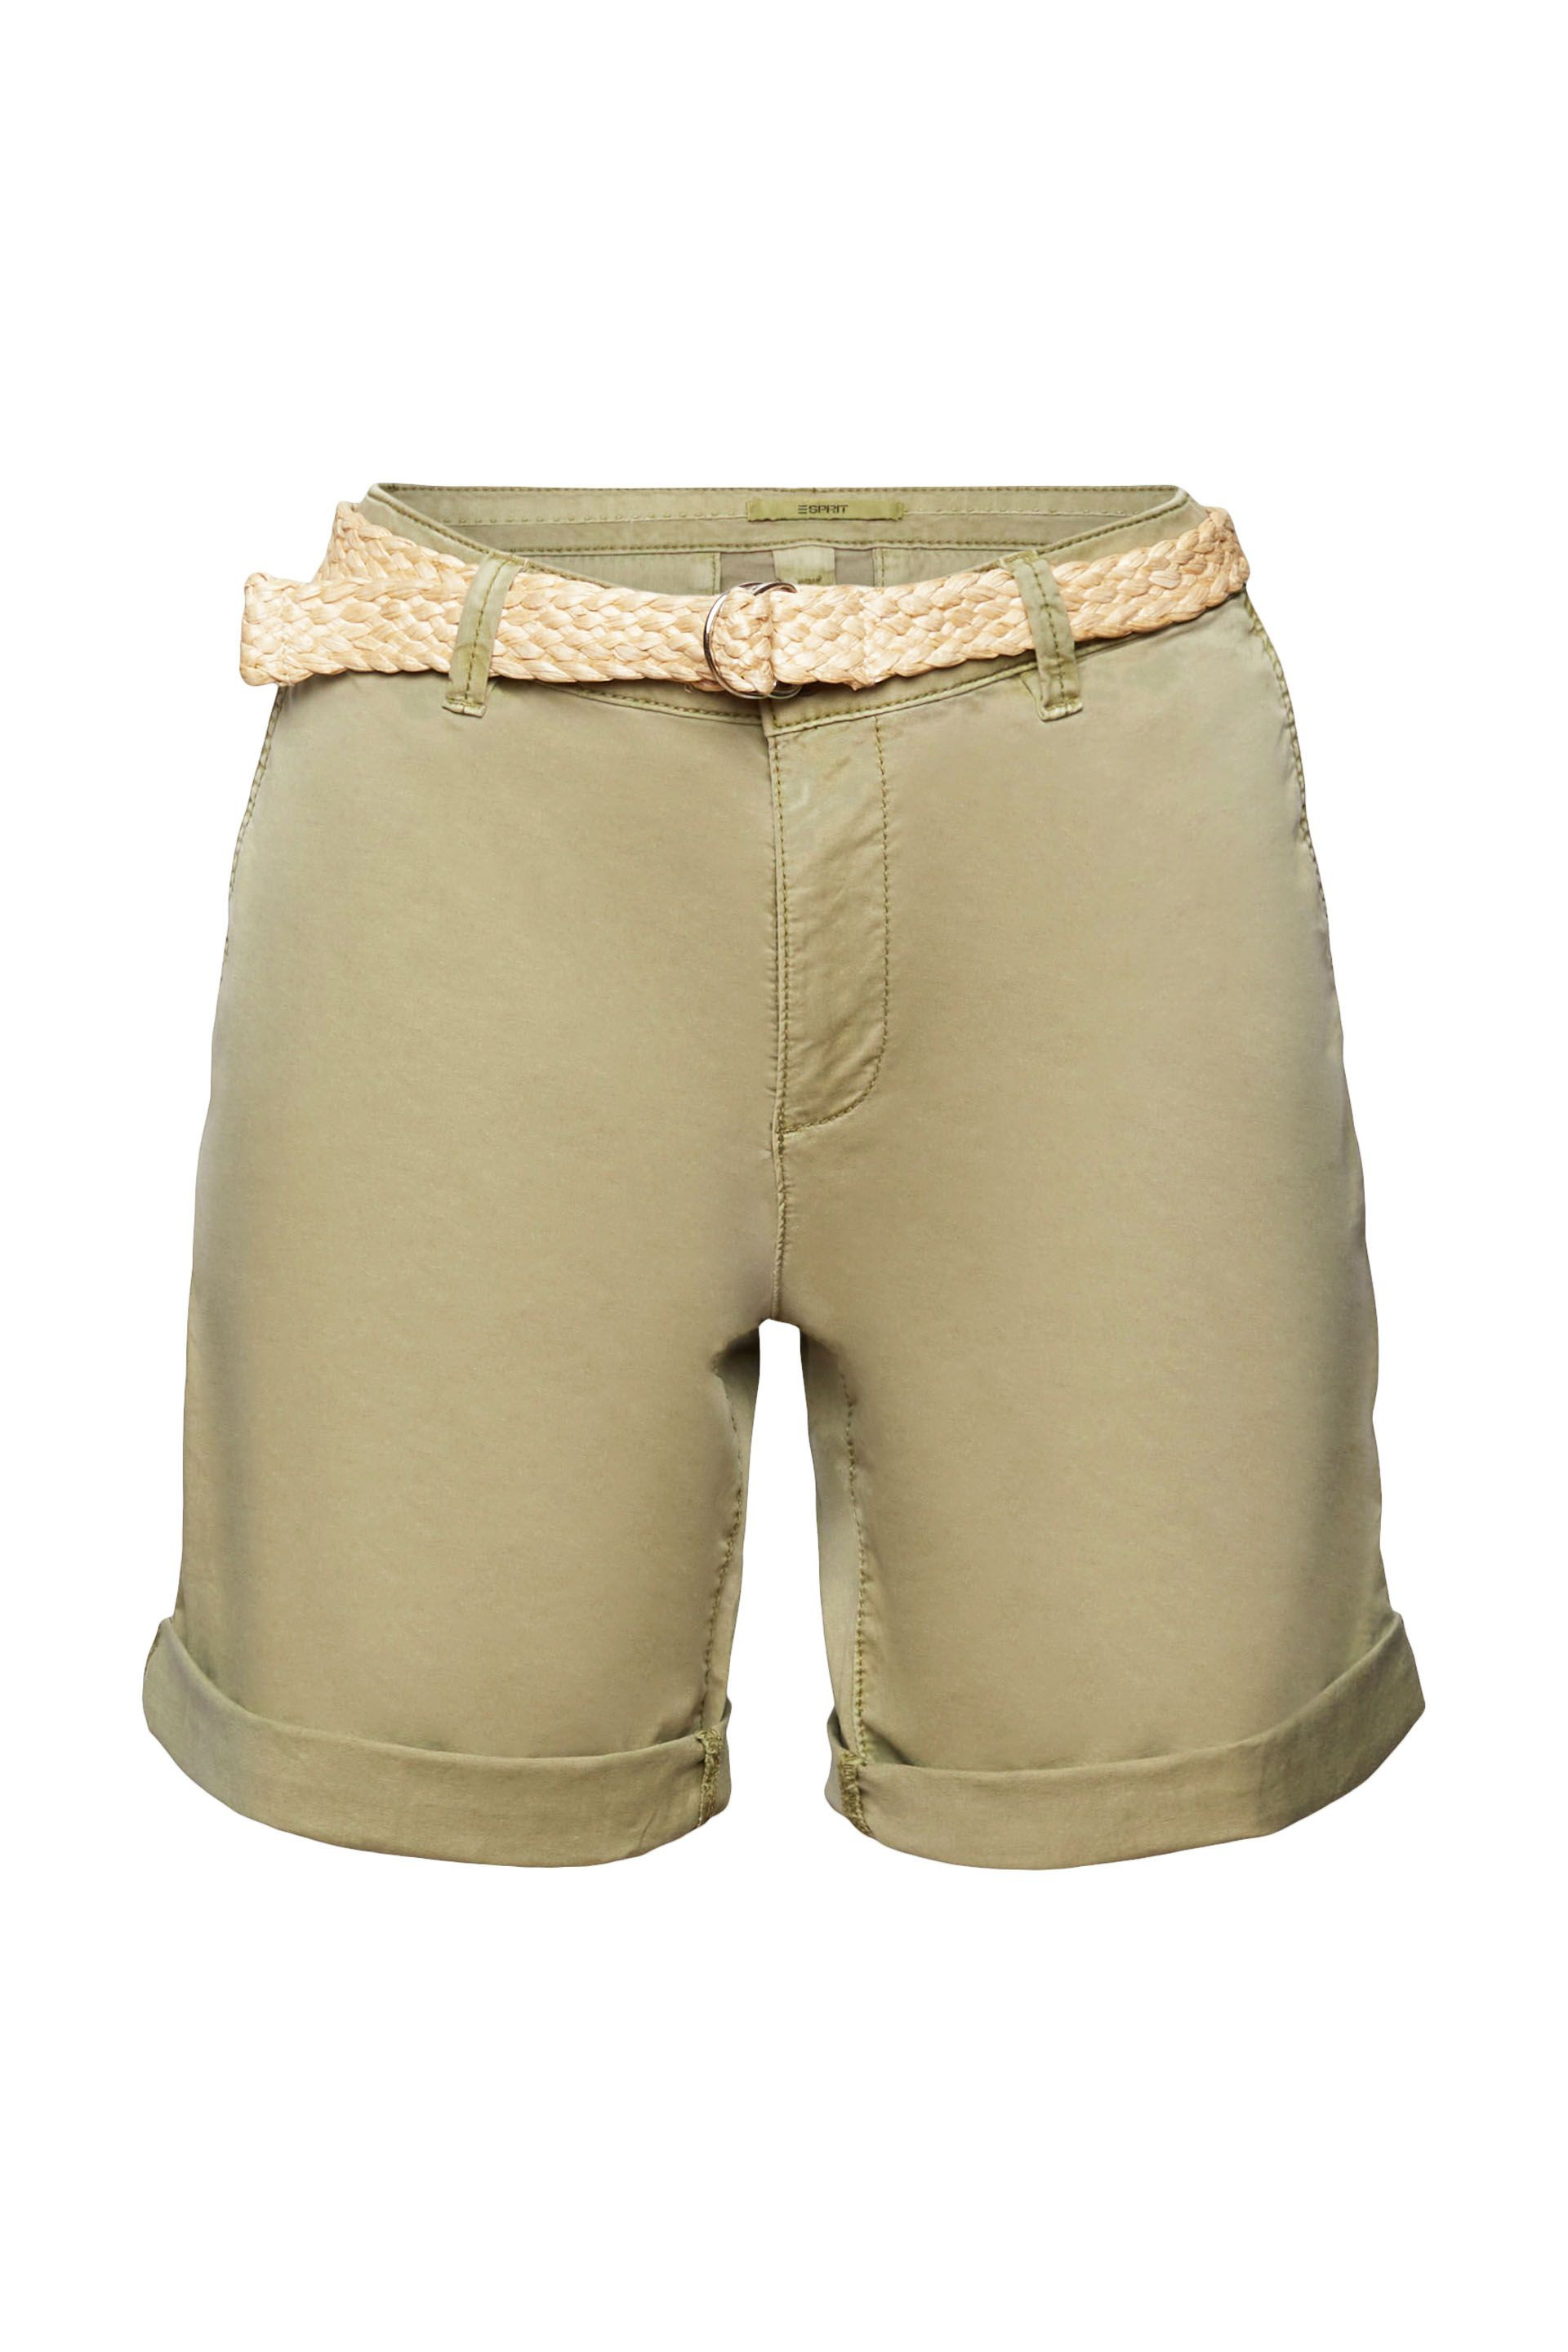 Esprit - Shorts with braided raffia belt, Green, large image number 0